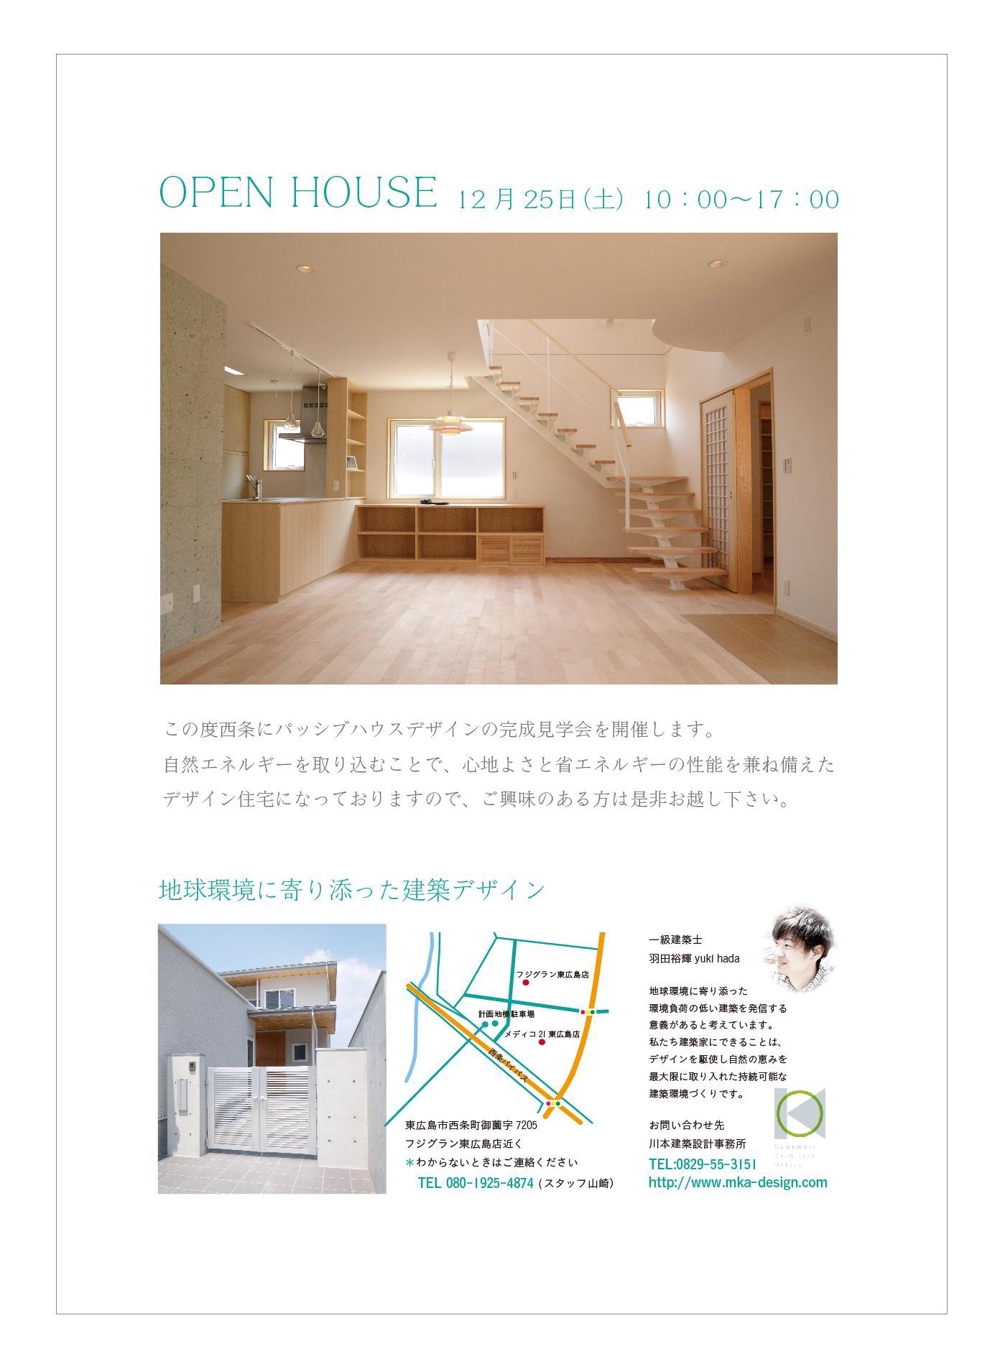 openhouse02.jpg